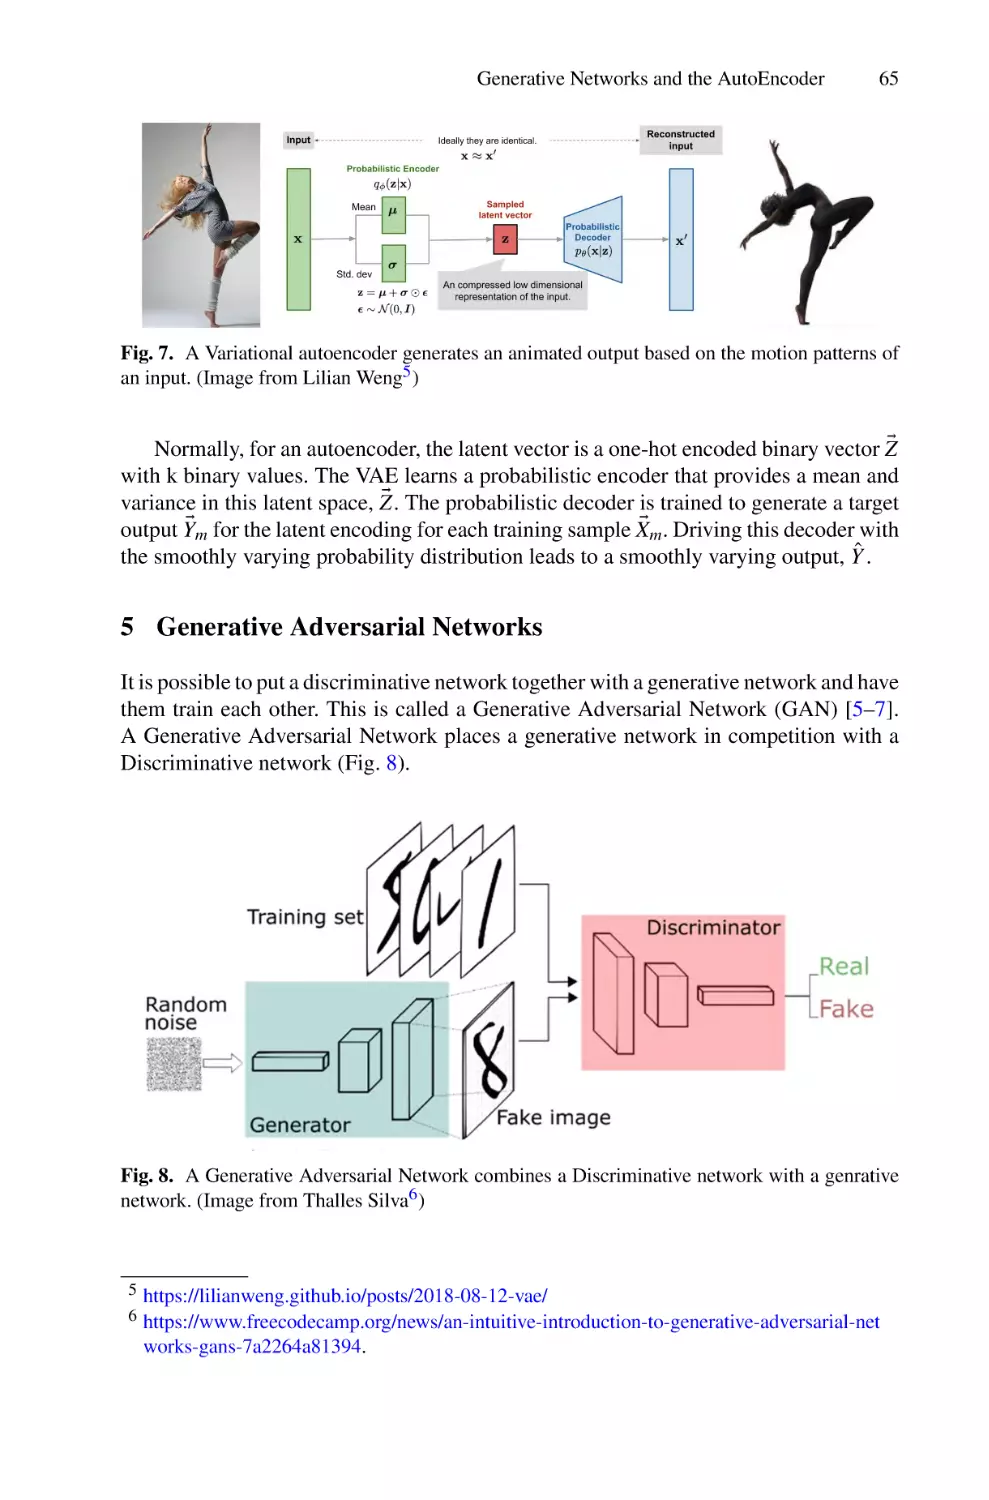 5 Generative Adversarial Networks